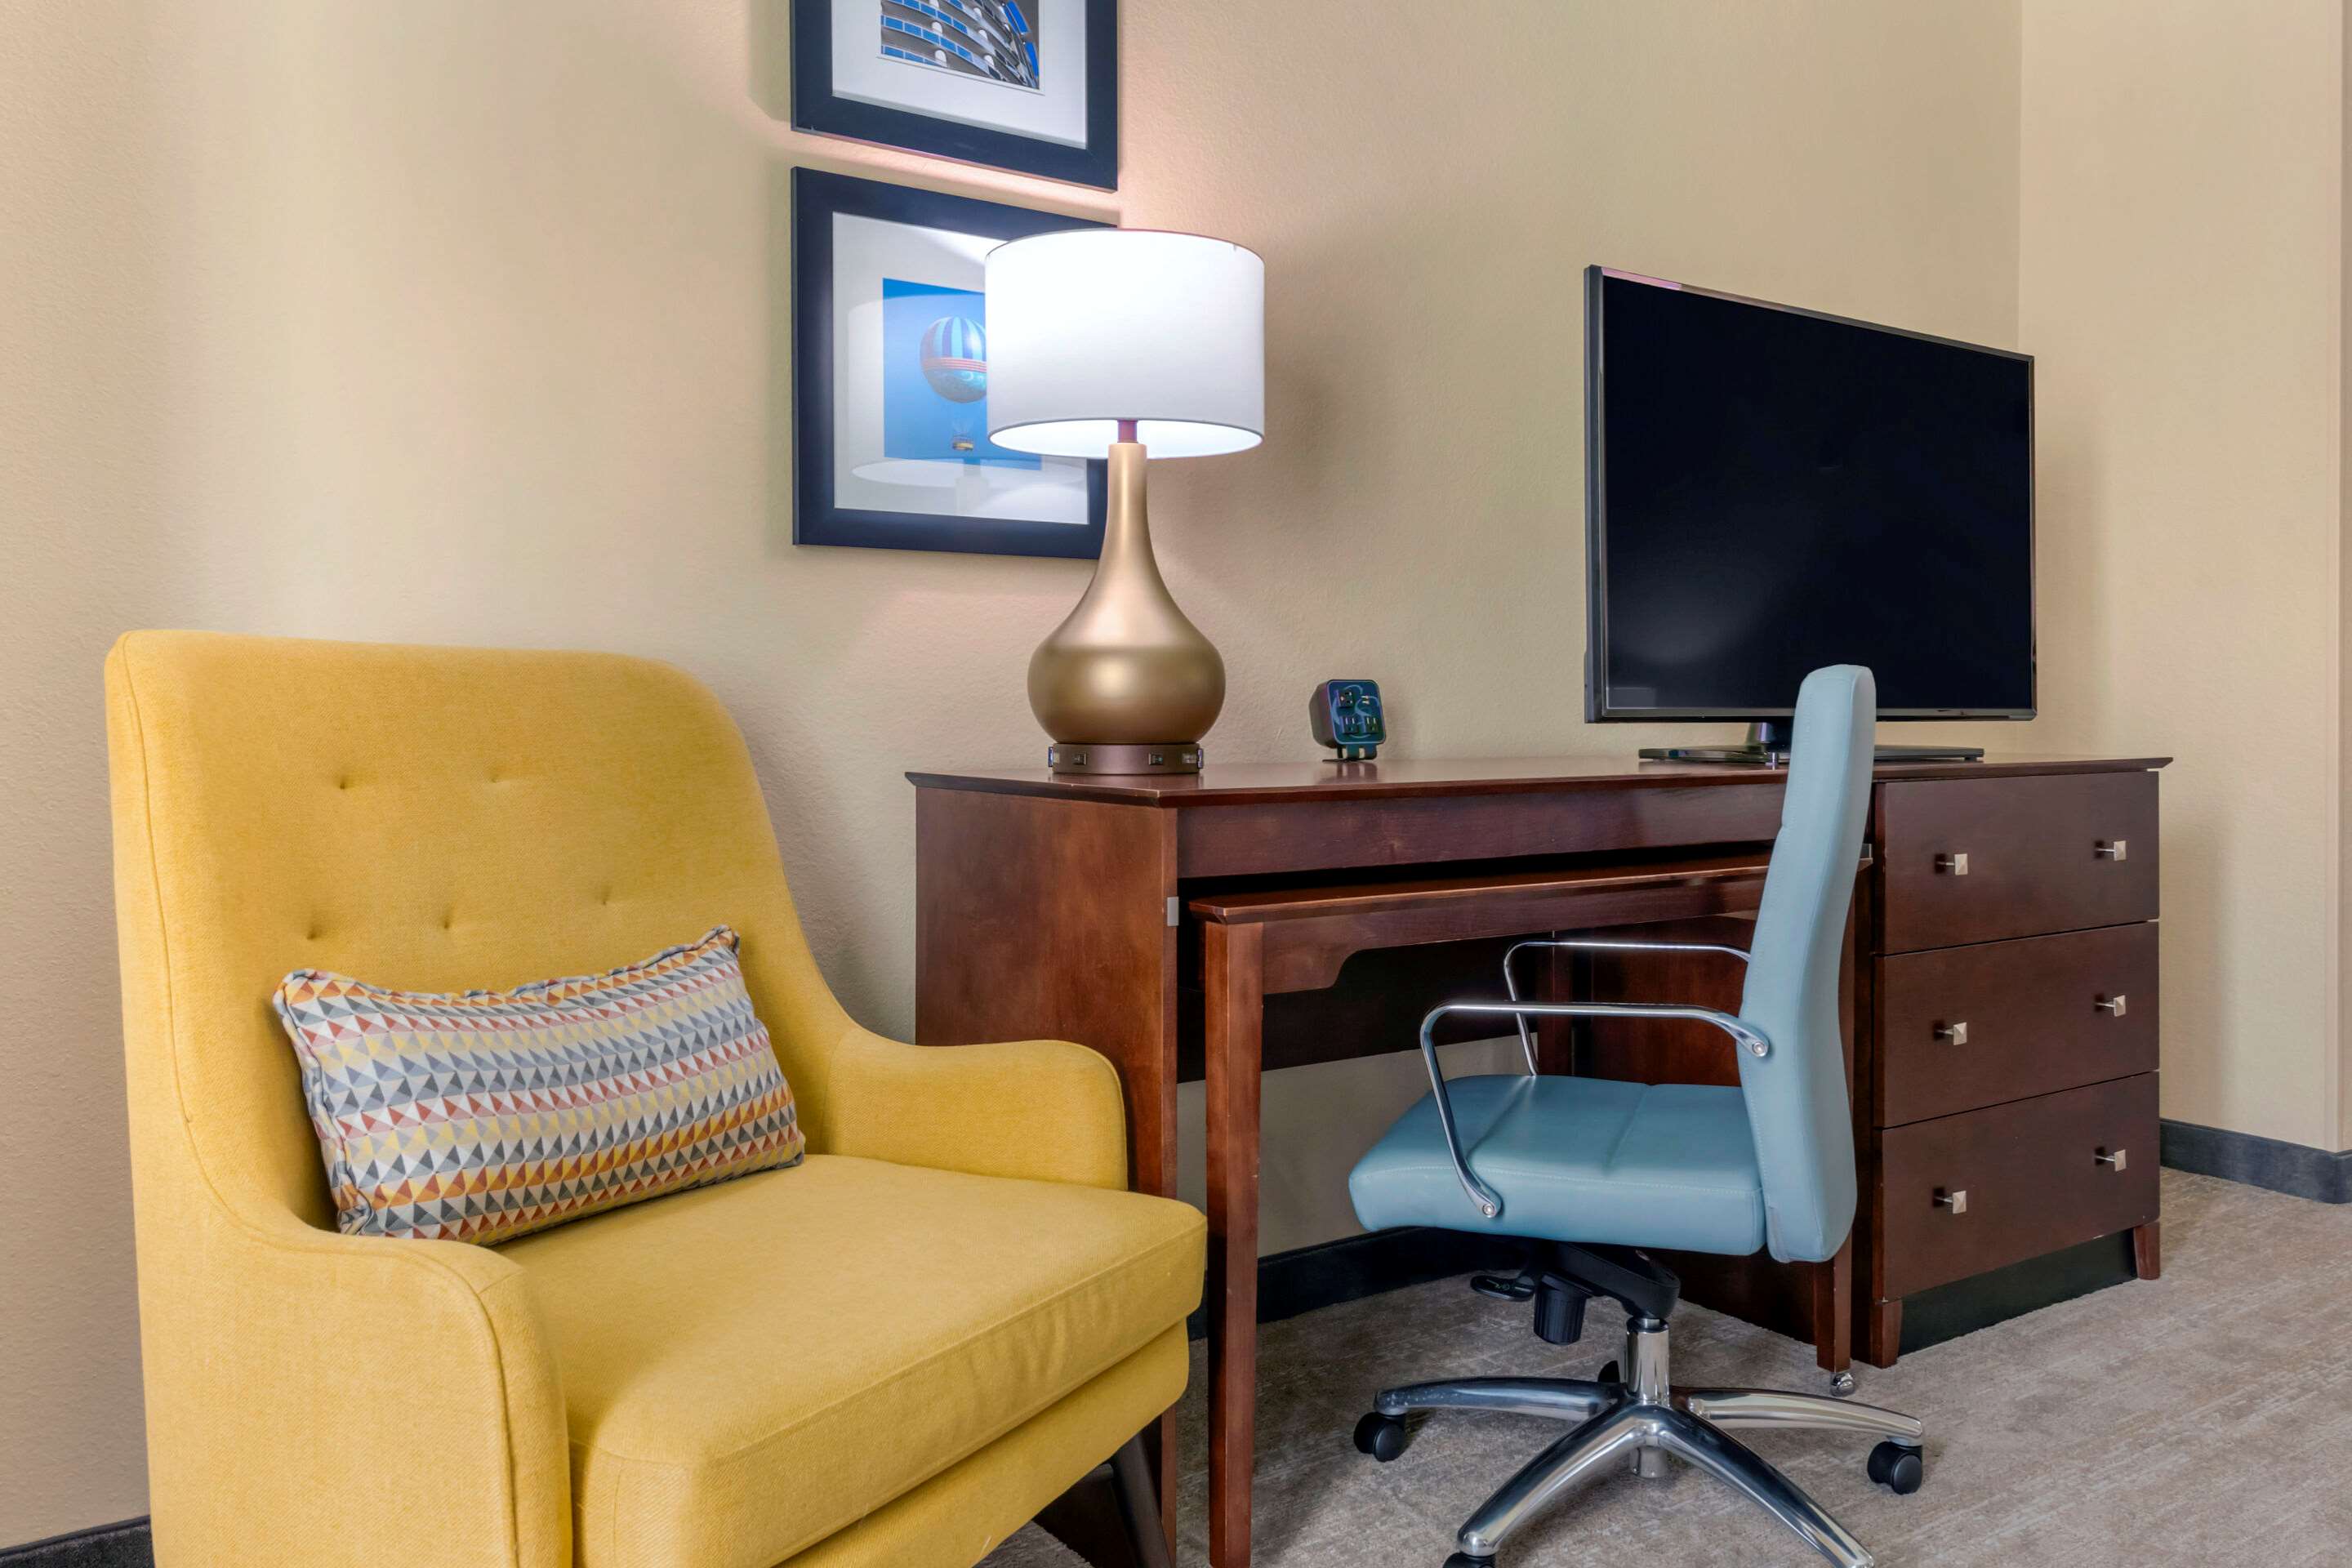 Comfort Suites Near Universal Orlando Resort